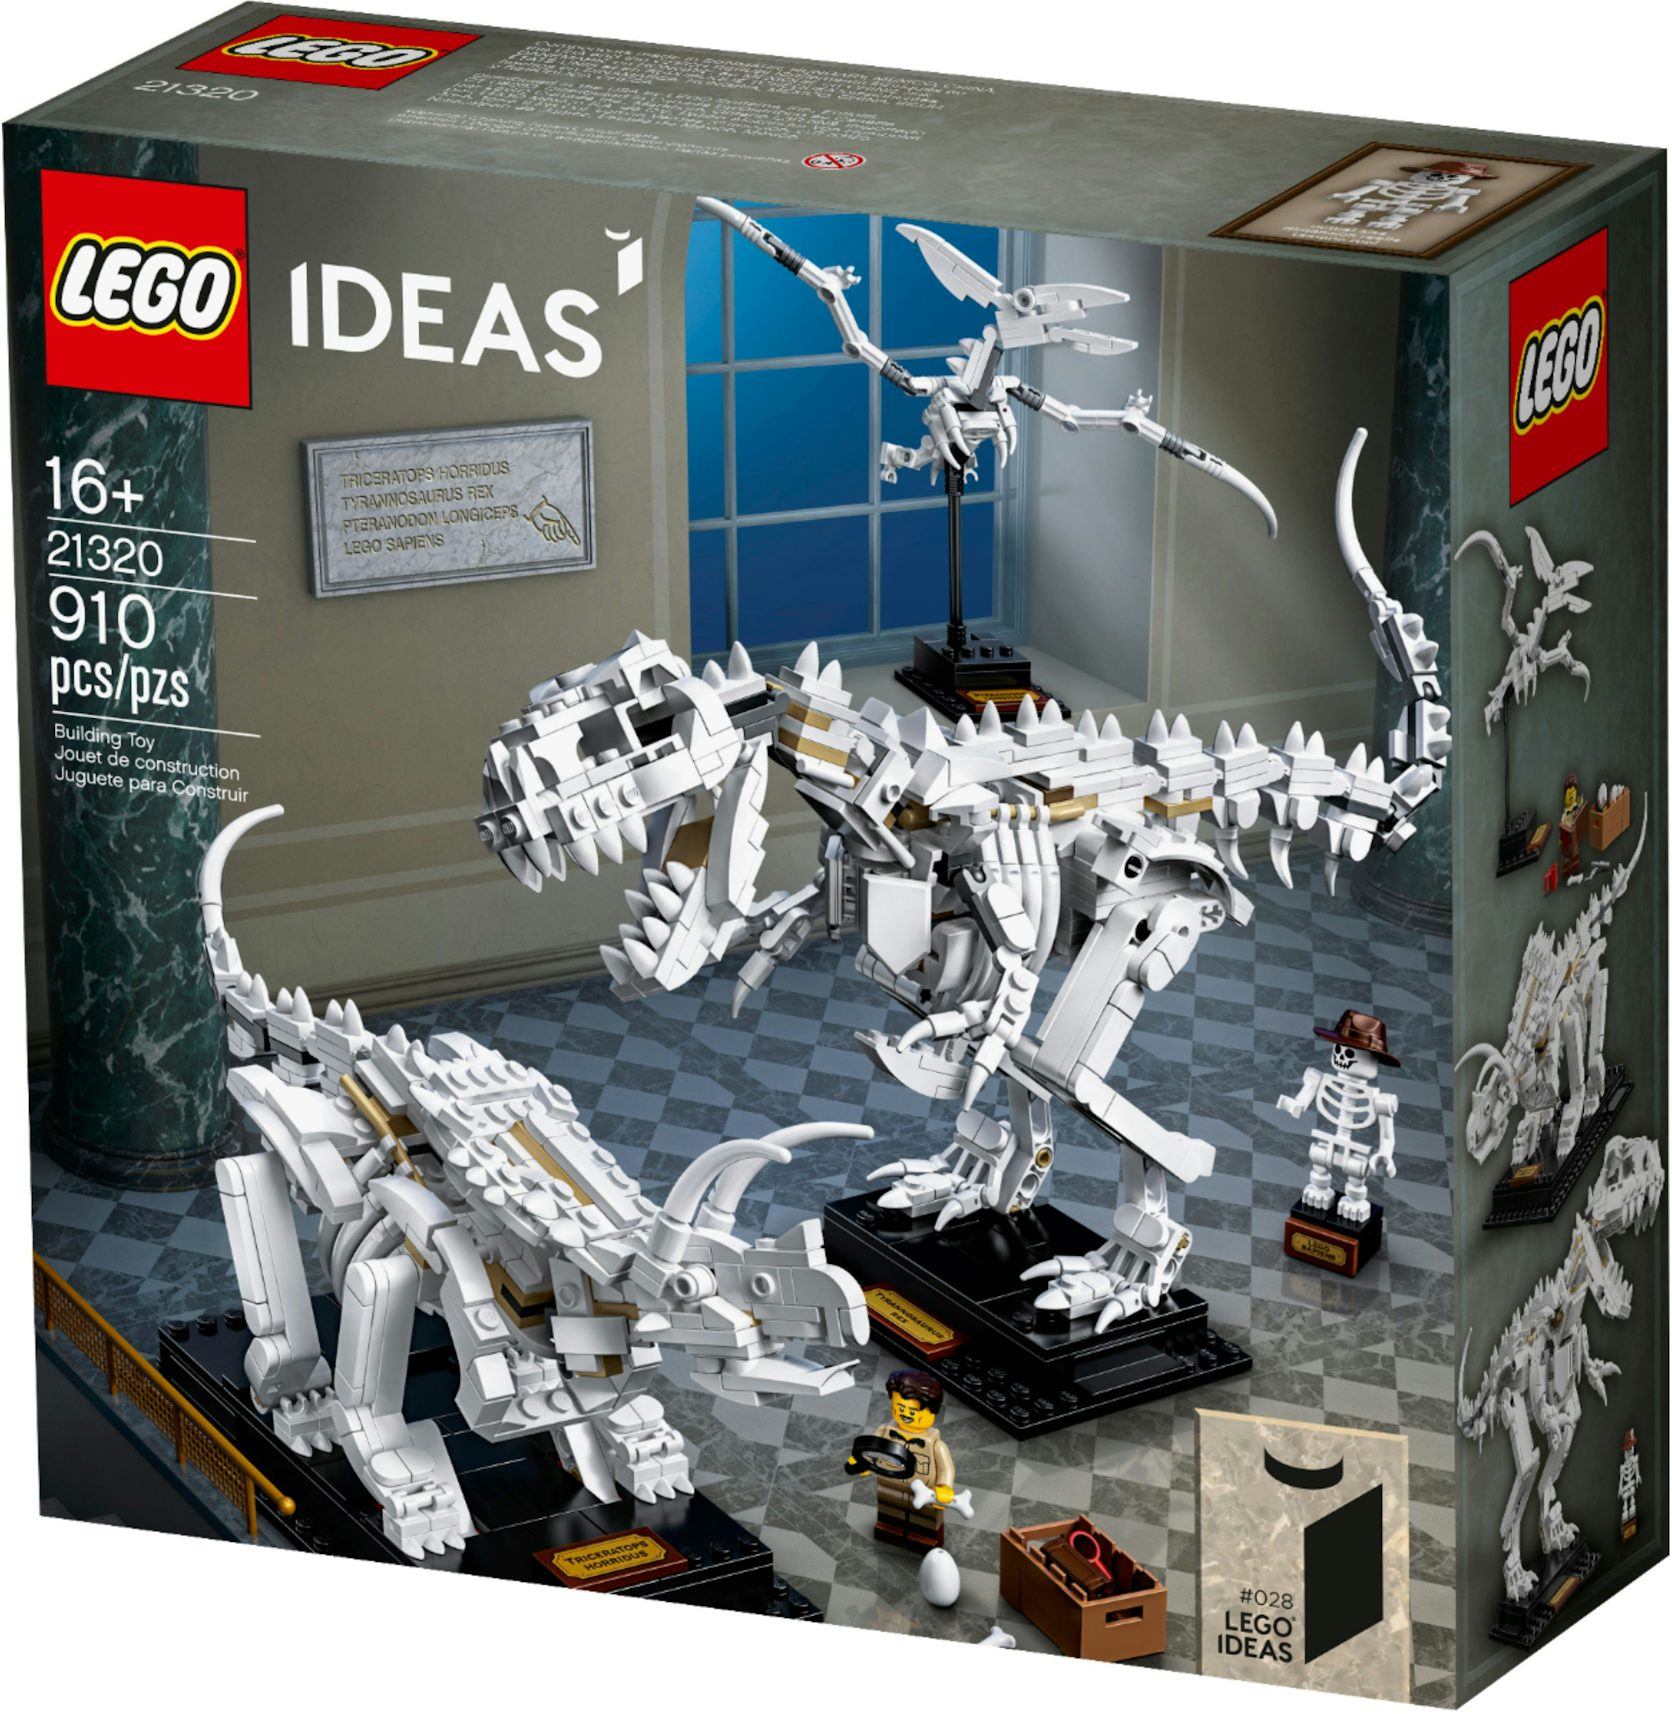 https://images.stockx.com/images/LEGO-Ideas-Dinosaur-Fossils-Set-21320.jpg?fit=fill&bg=FFFFFF&w=1200&h=857&fm=jpg&auto=compress&dpr=2&trim=color&updated_at=1650659147&q=60